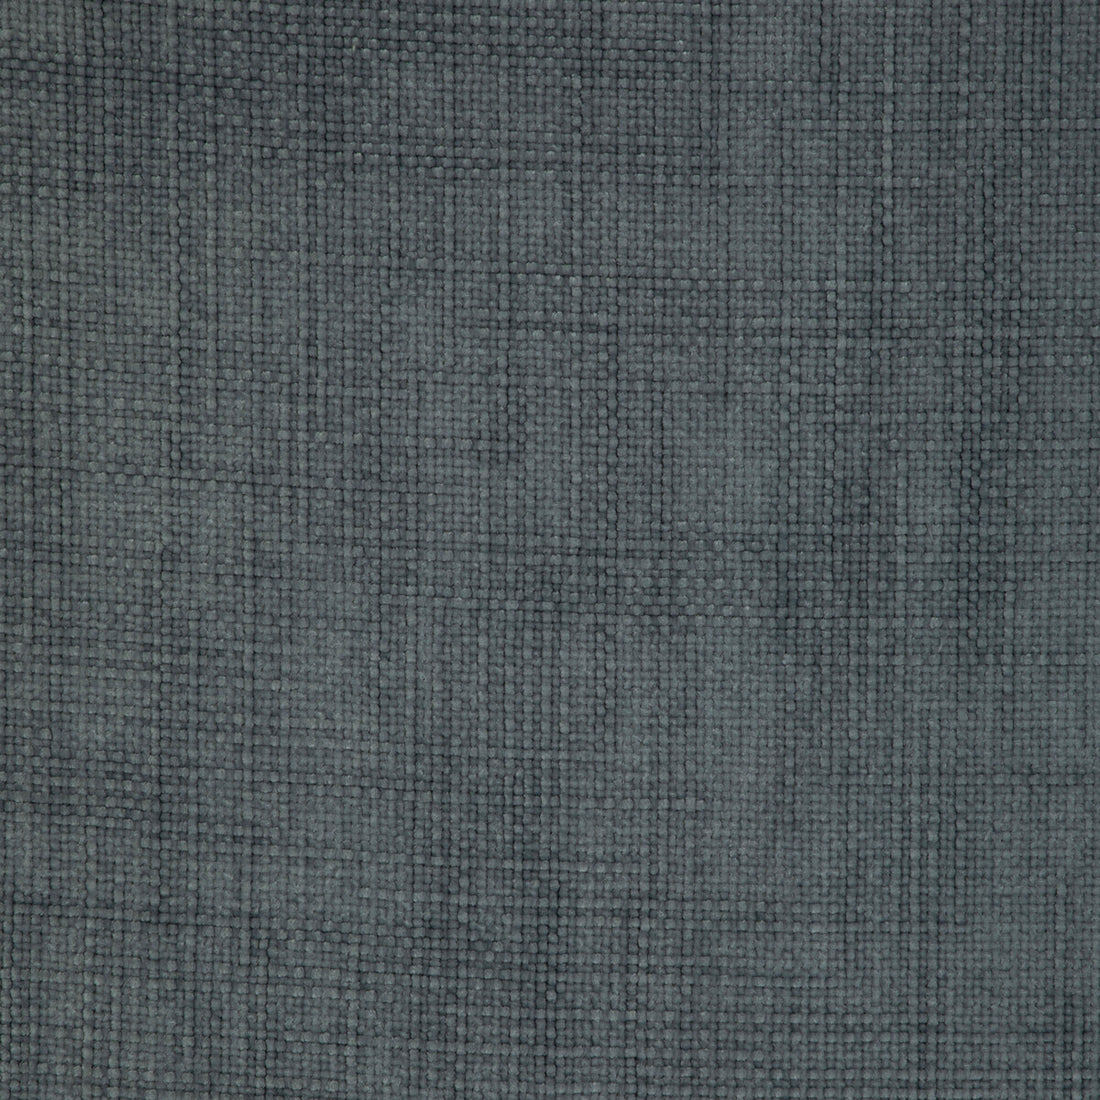 Kravet Smart fabric in 36991-52 color - pattern 36991.52.0 - by Kravet Smart in the Performance Kravetarmor collection